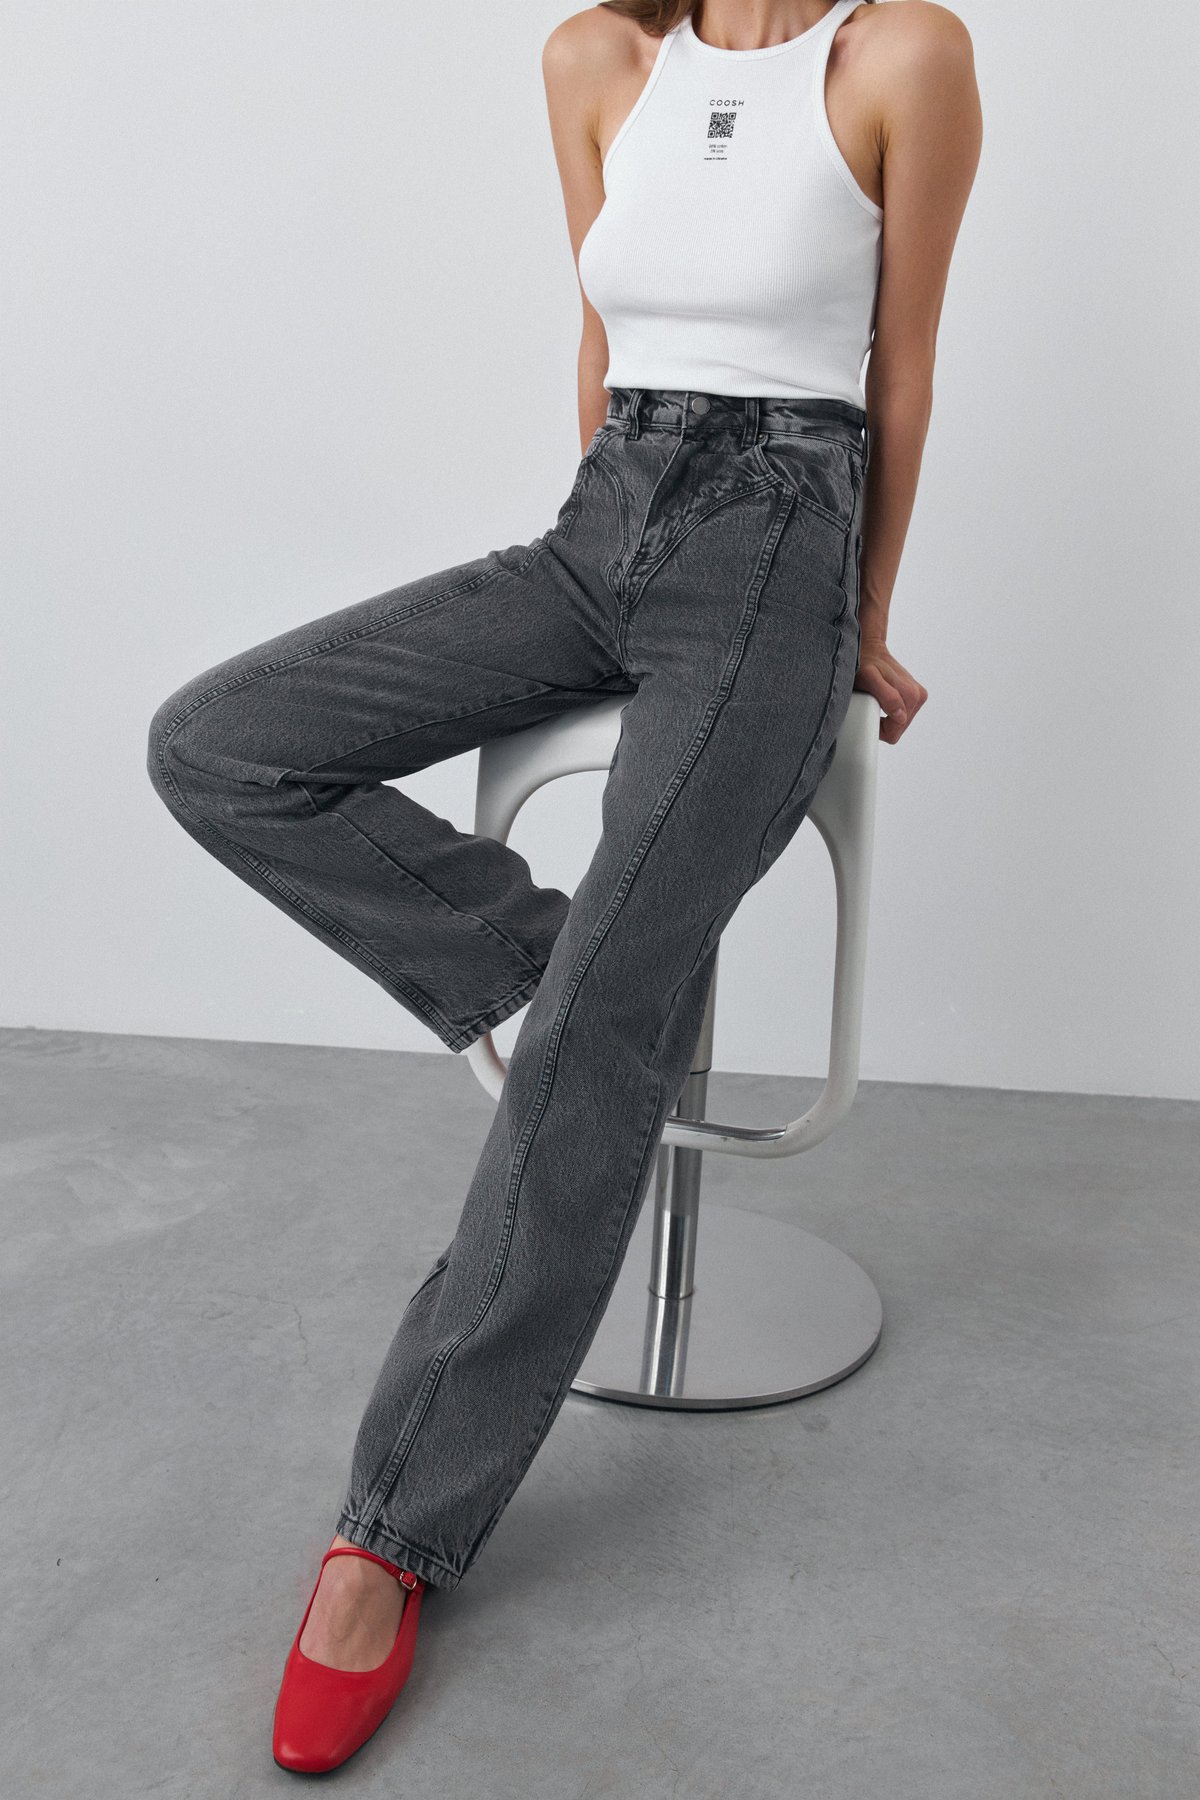 High Waisted Straight Cut BIKINI Jeans